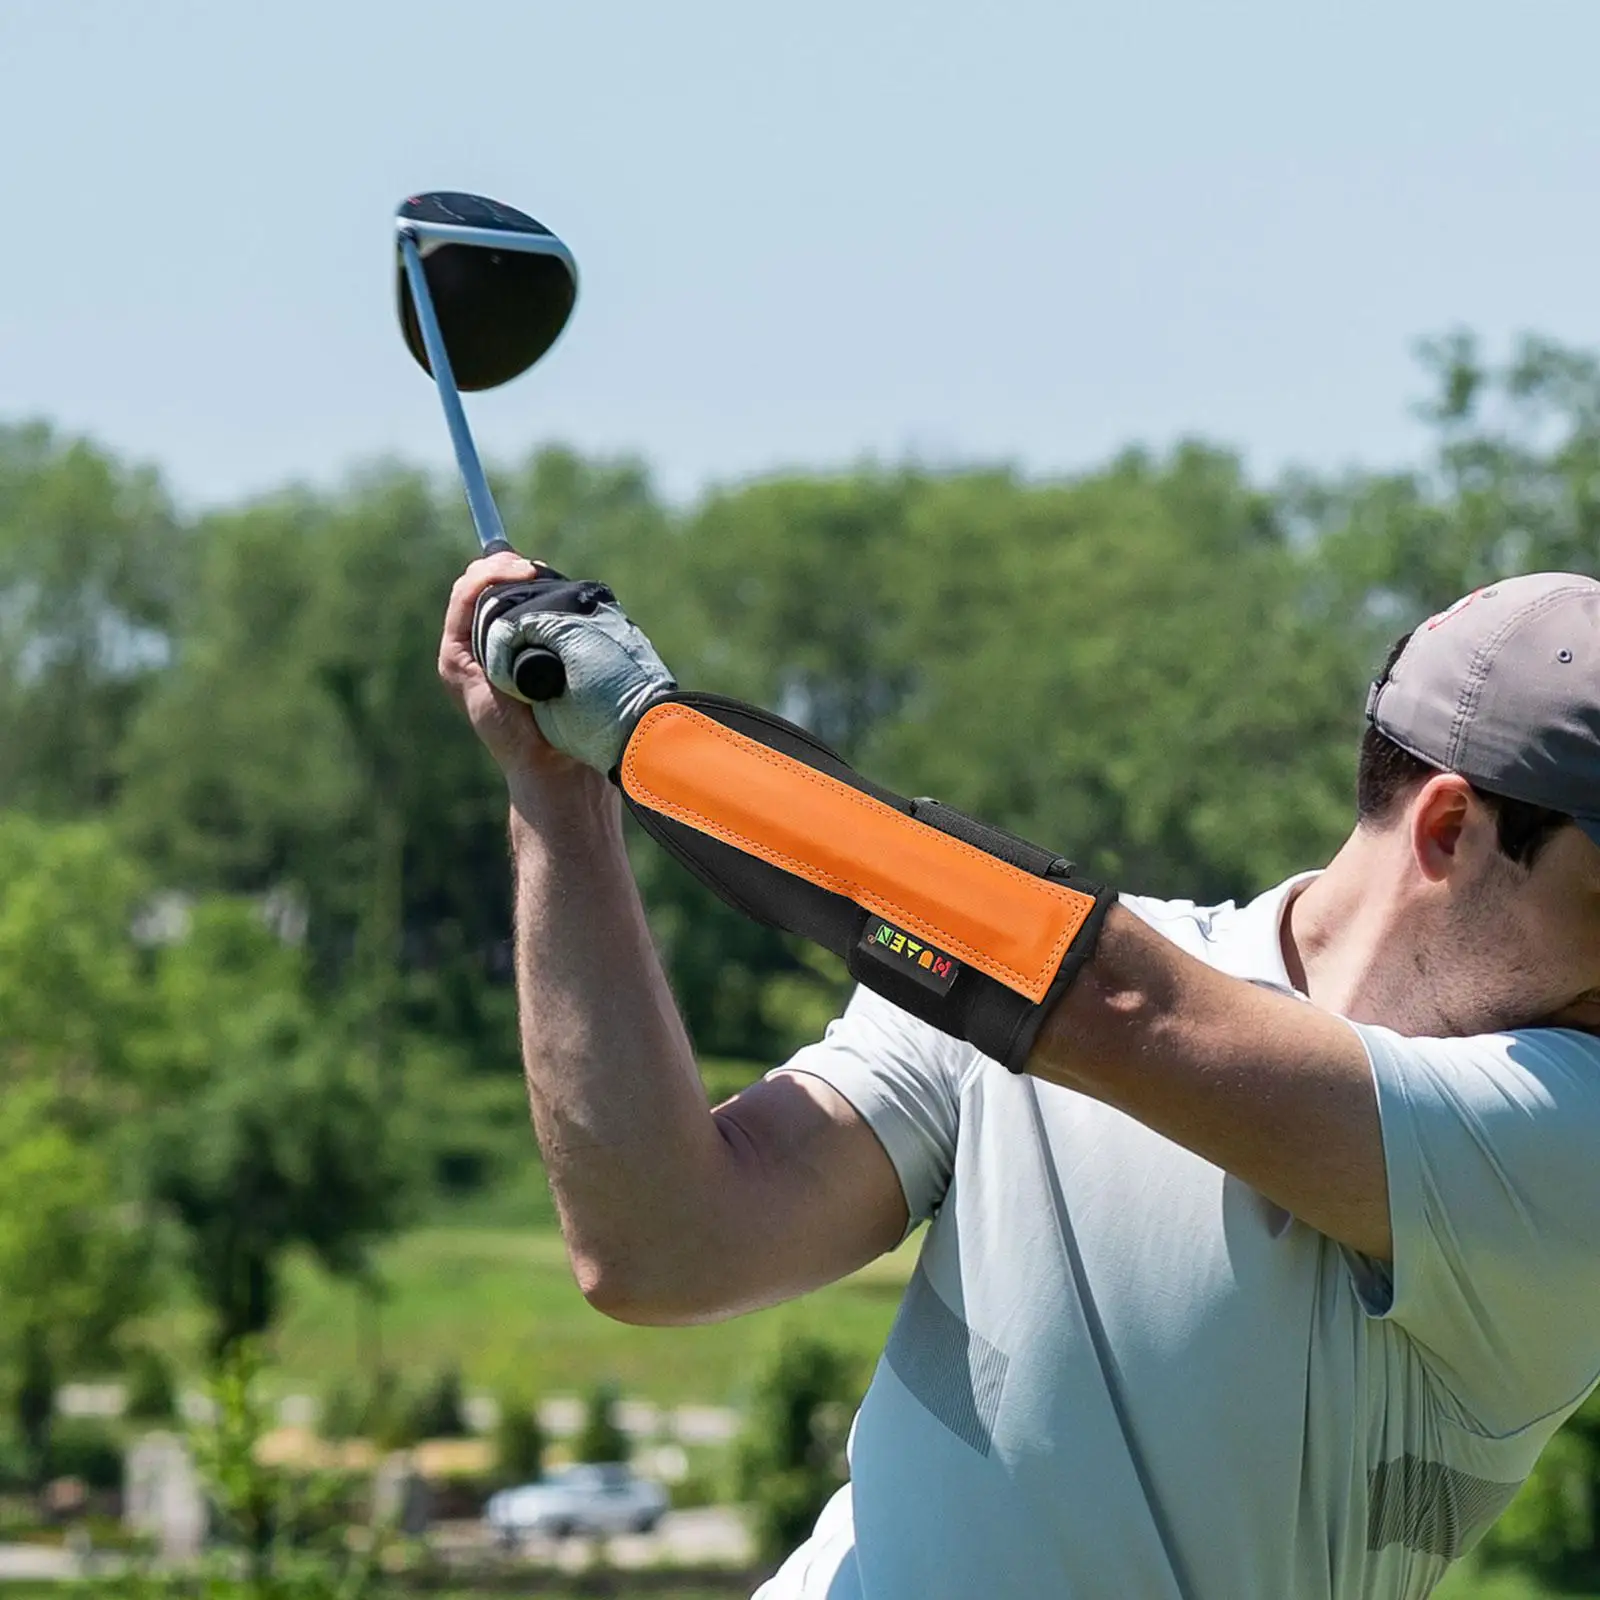 

Golf Swing Trainer Golf Alignment Practice Tool Golf Wrist Brace Band Golf Training Wrist Aid for Adults Men Women Beginners